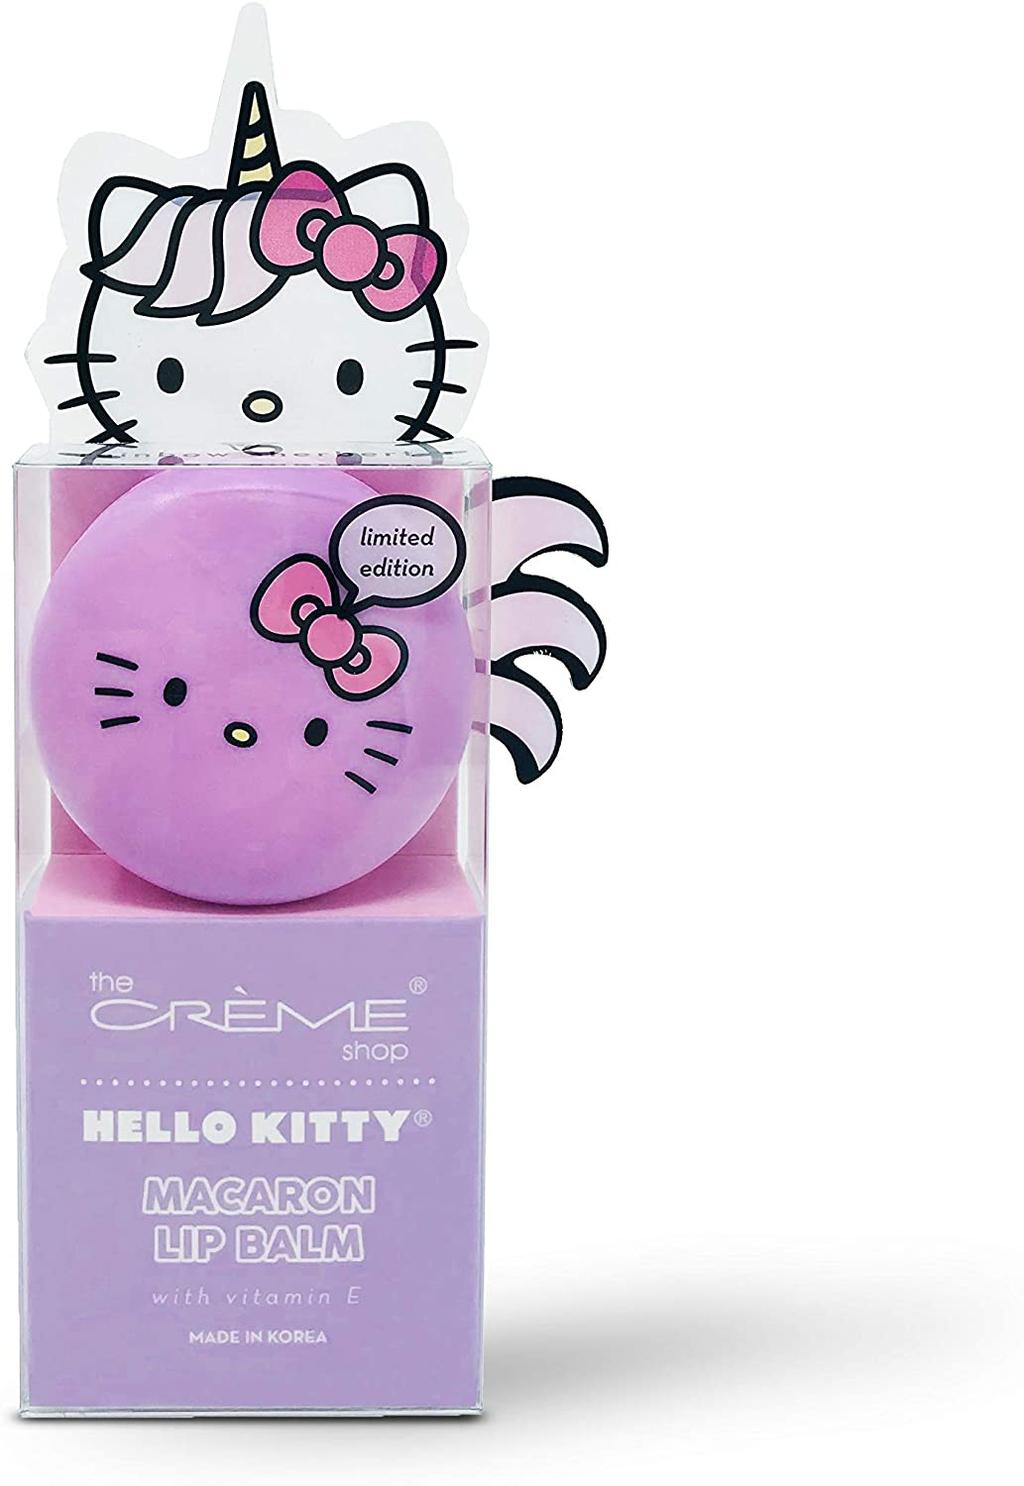 hello kitty unicorn macaron lip balm Main image  width="825" height="699"